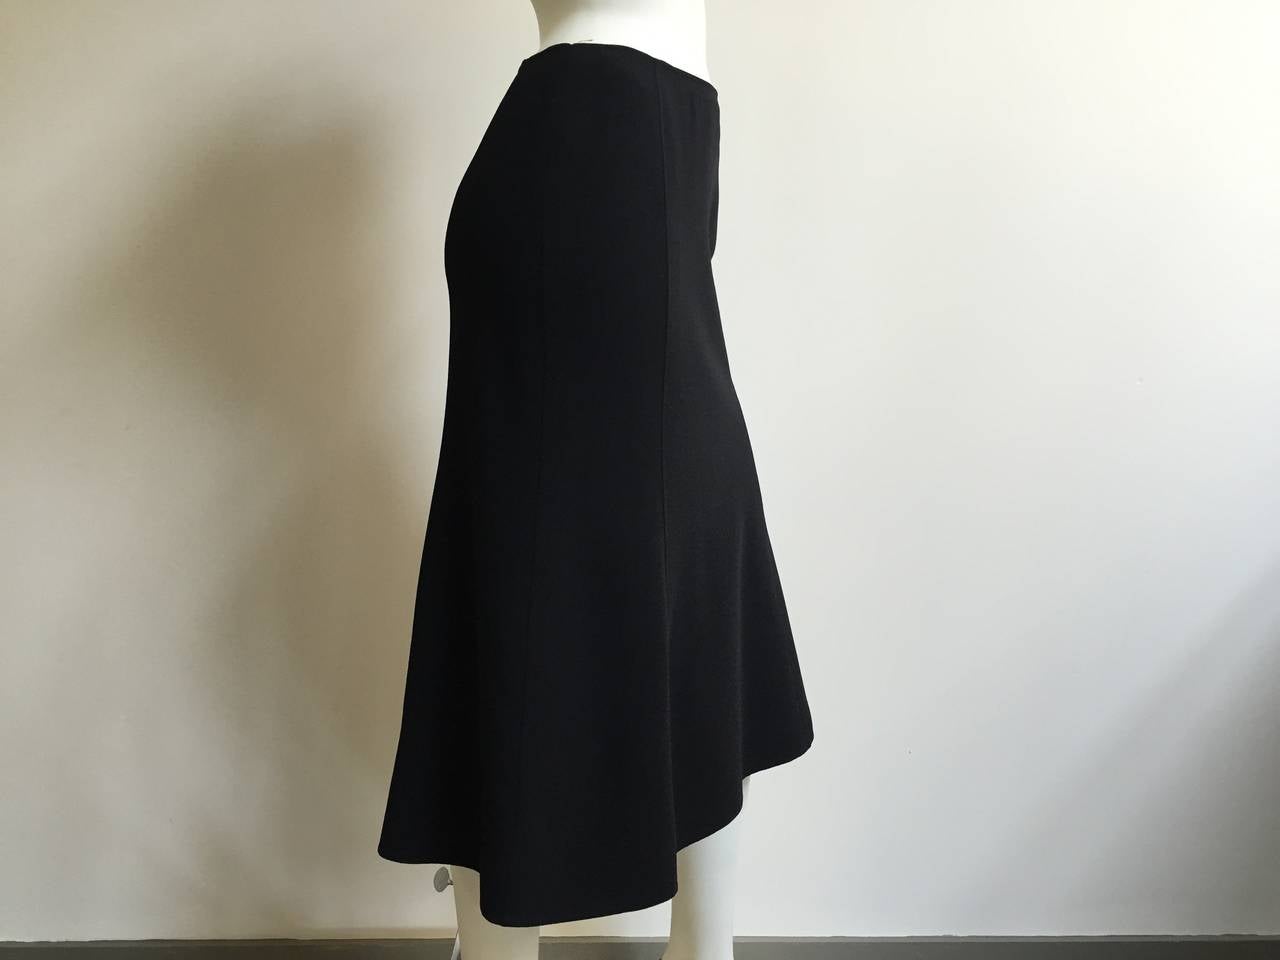 Celine black wool skirt size 4/6. 3